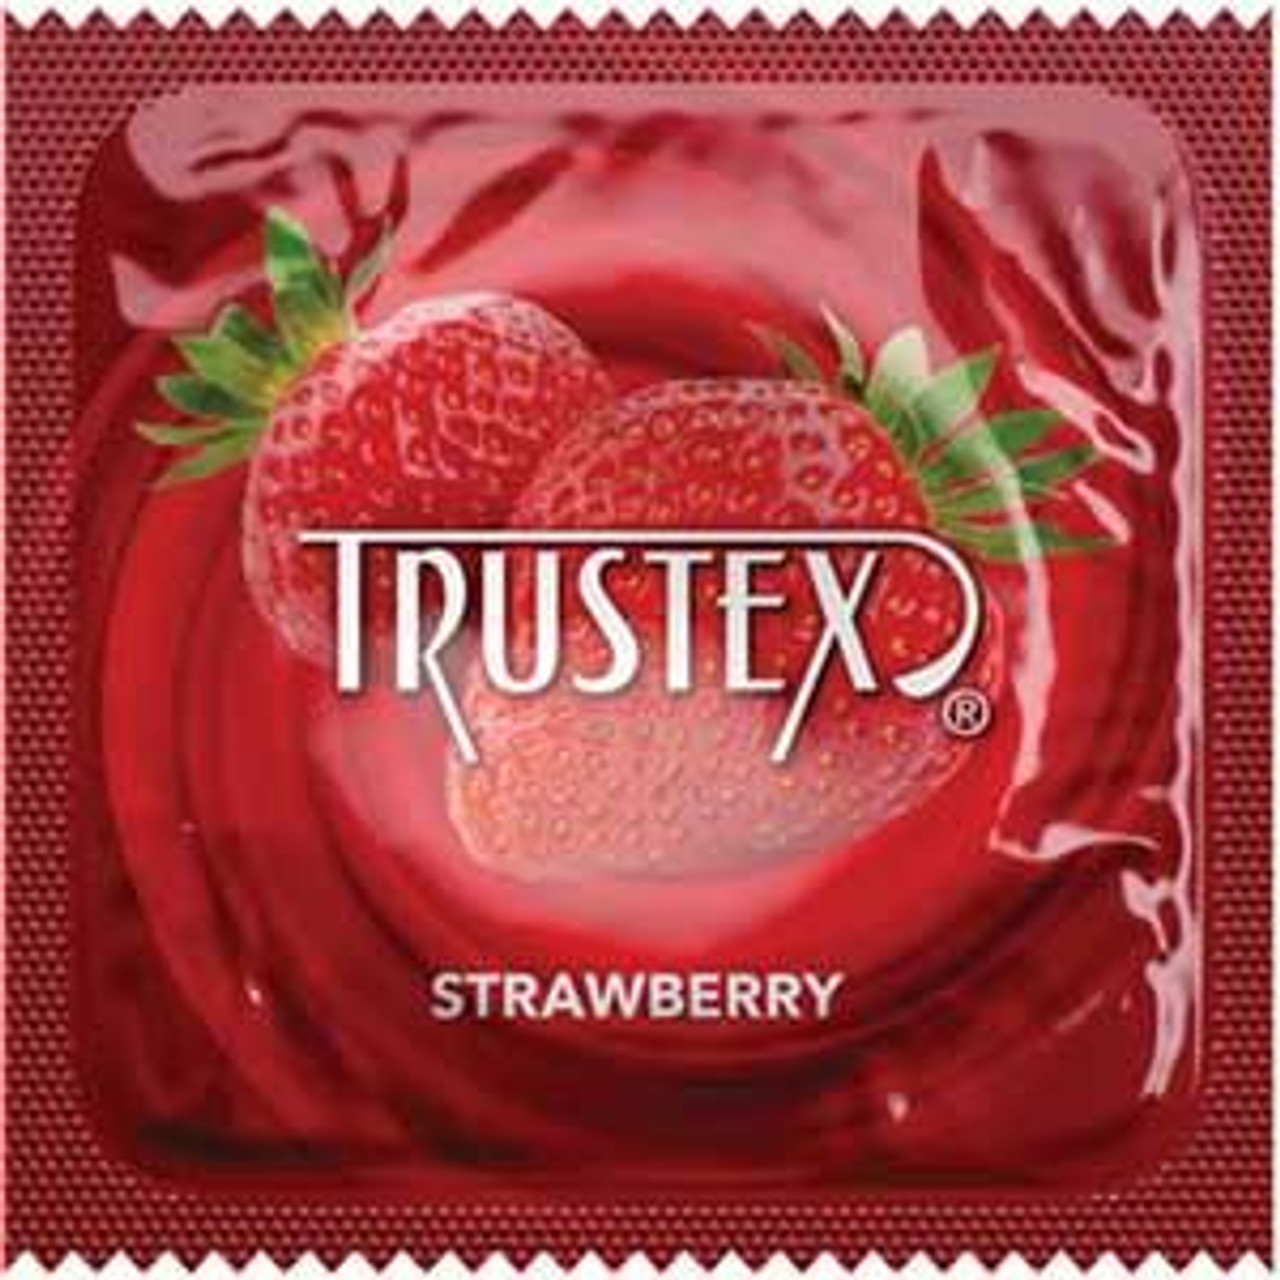 Trustex Strawberry Flavored Condoms | - Buy Trustex Condoms Online at CondomDepot.com